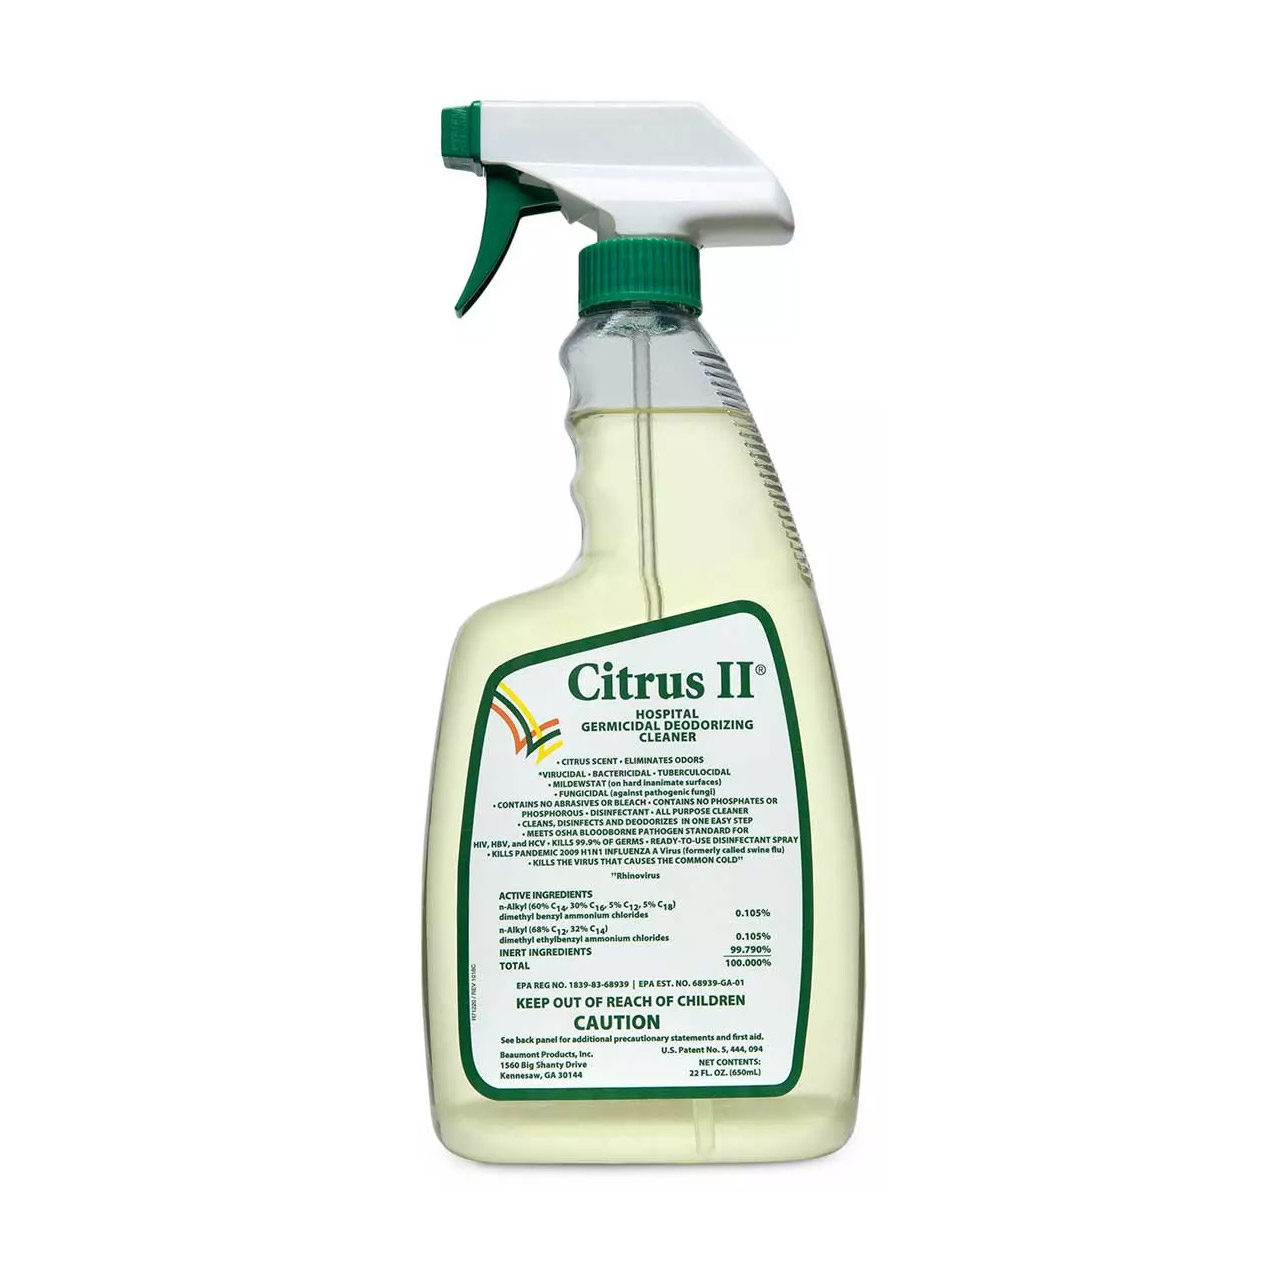 RES6100 Citrus II Hospital Germicidal Deodorizing Cleaner